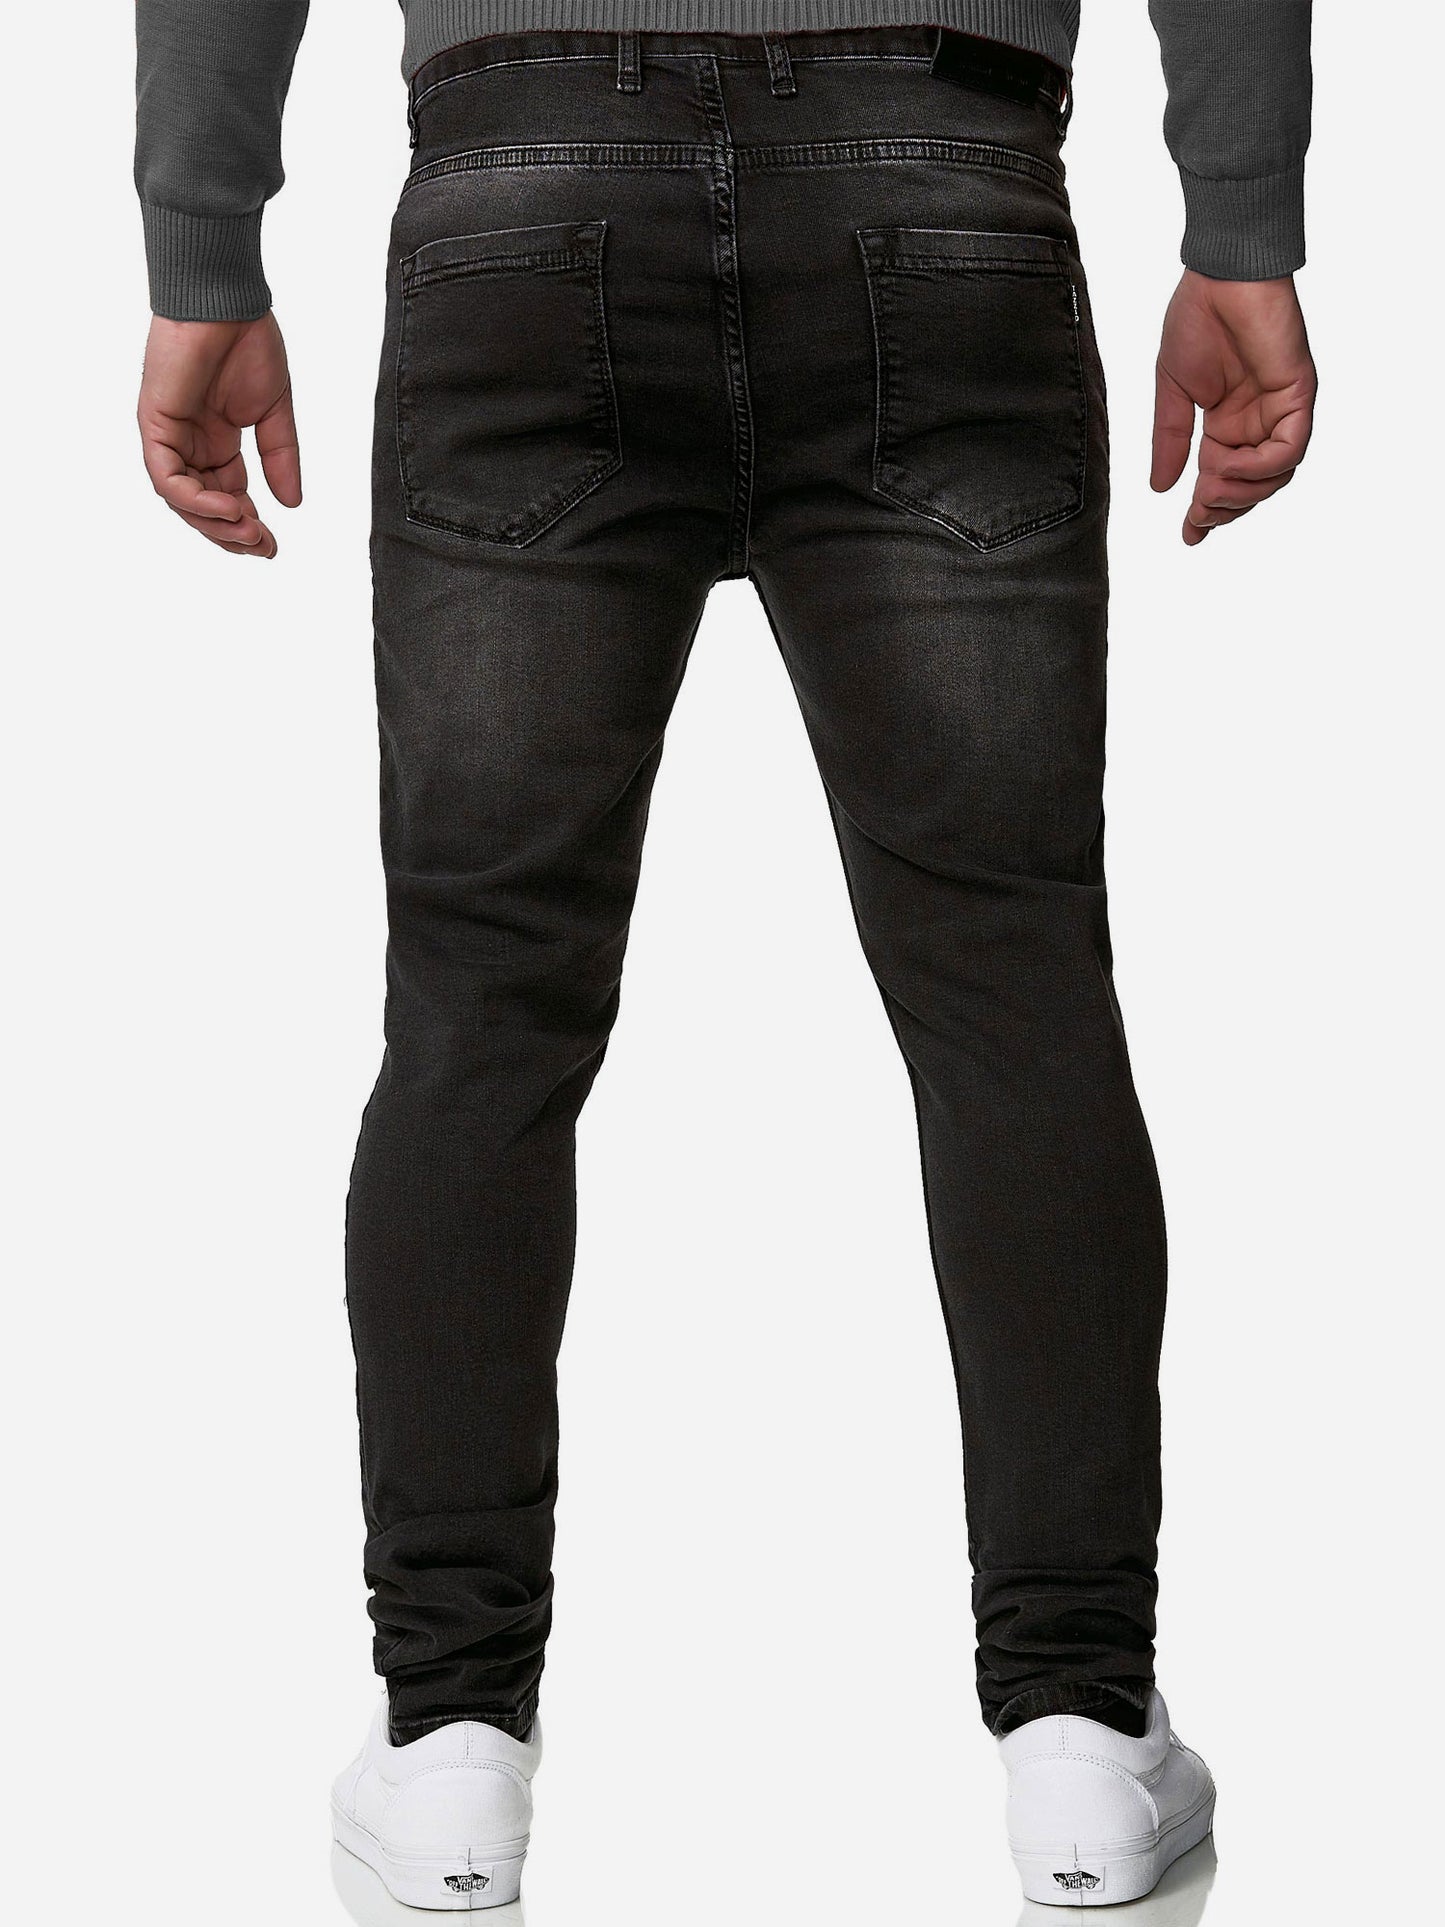 Tazzio Herren Jeans Skinny Fit im Destroyed Look A102